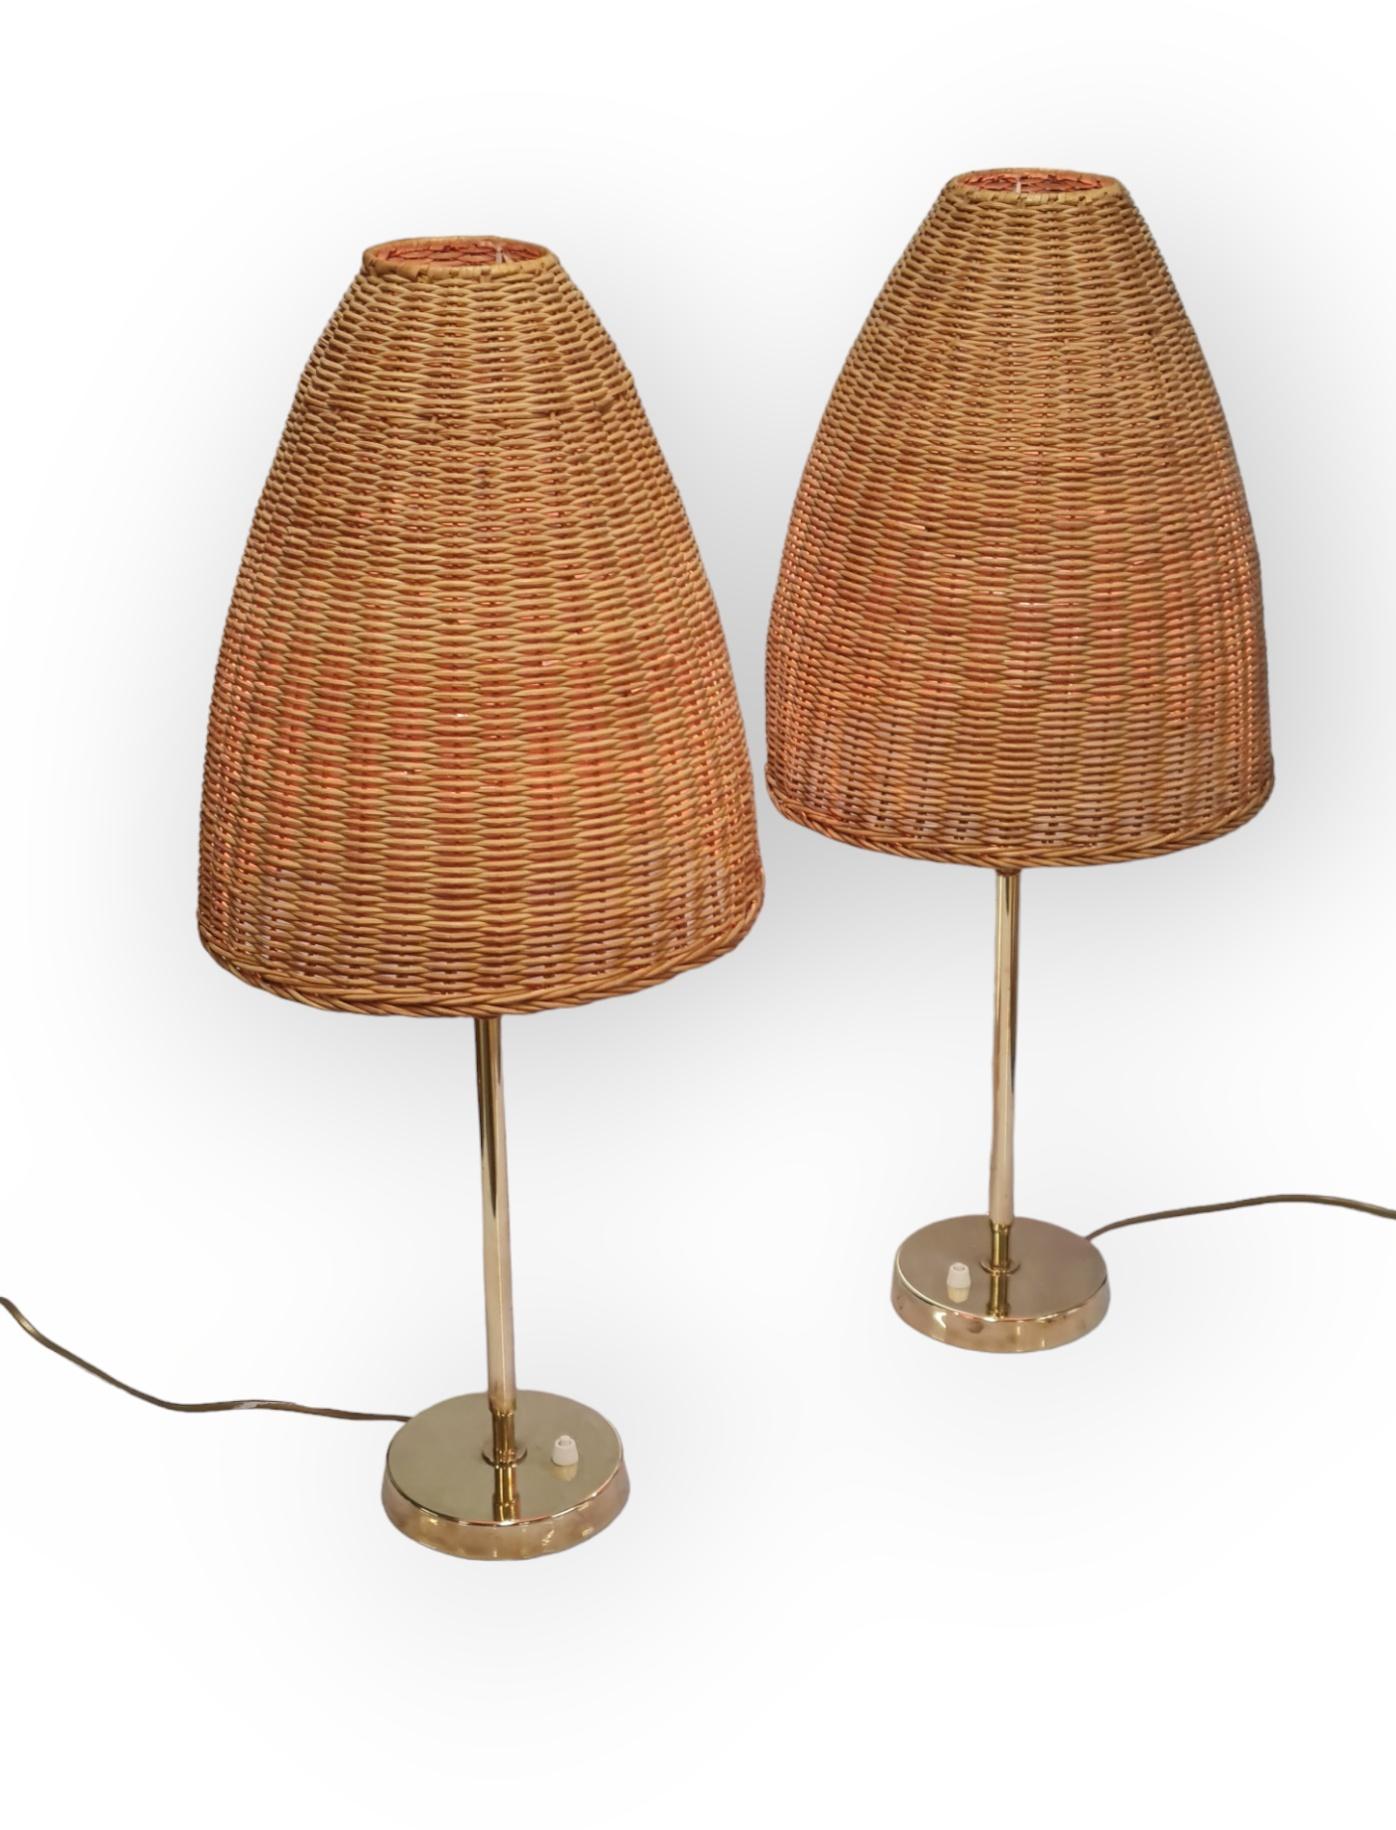 Scandinavian Modern Rare Pair of Maija Heikinheimo Table Lamps Model MH705, Valaistustyö 1960s For Sale